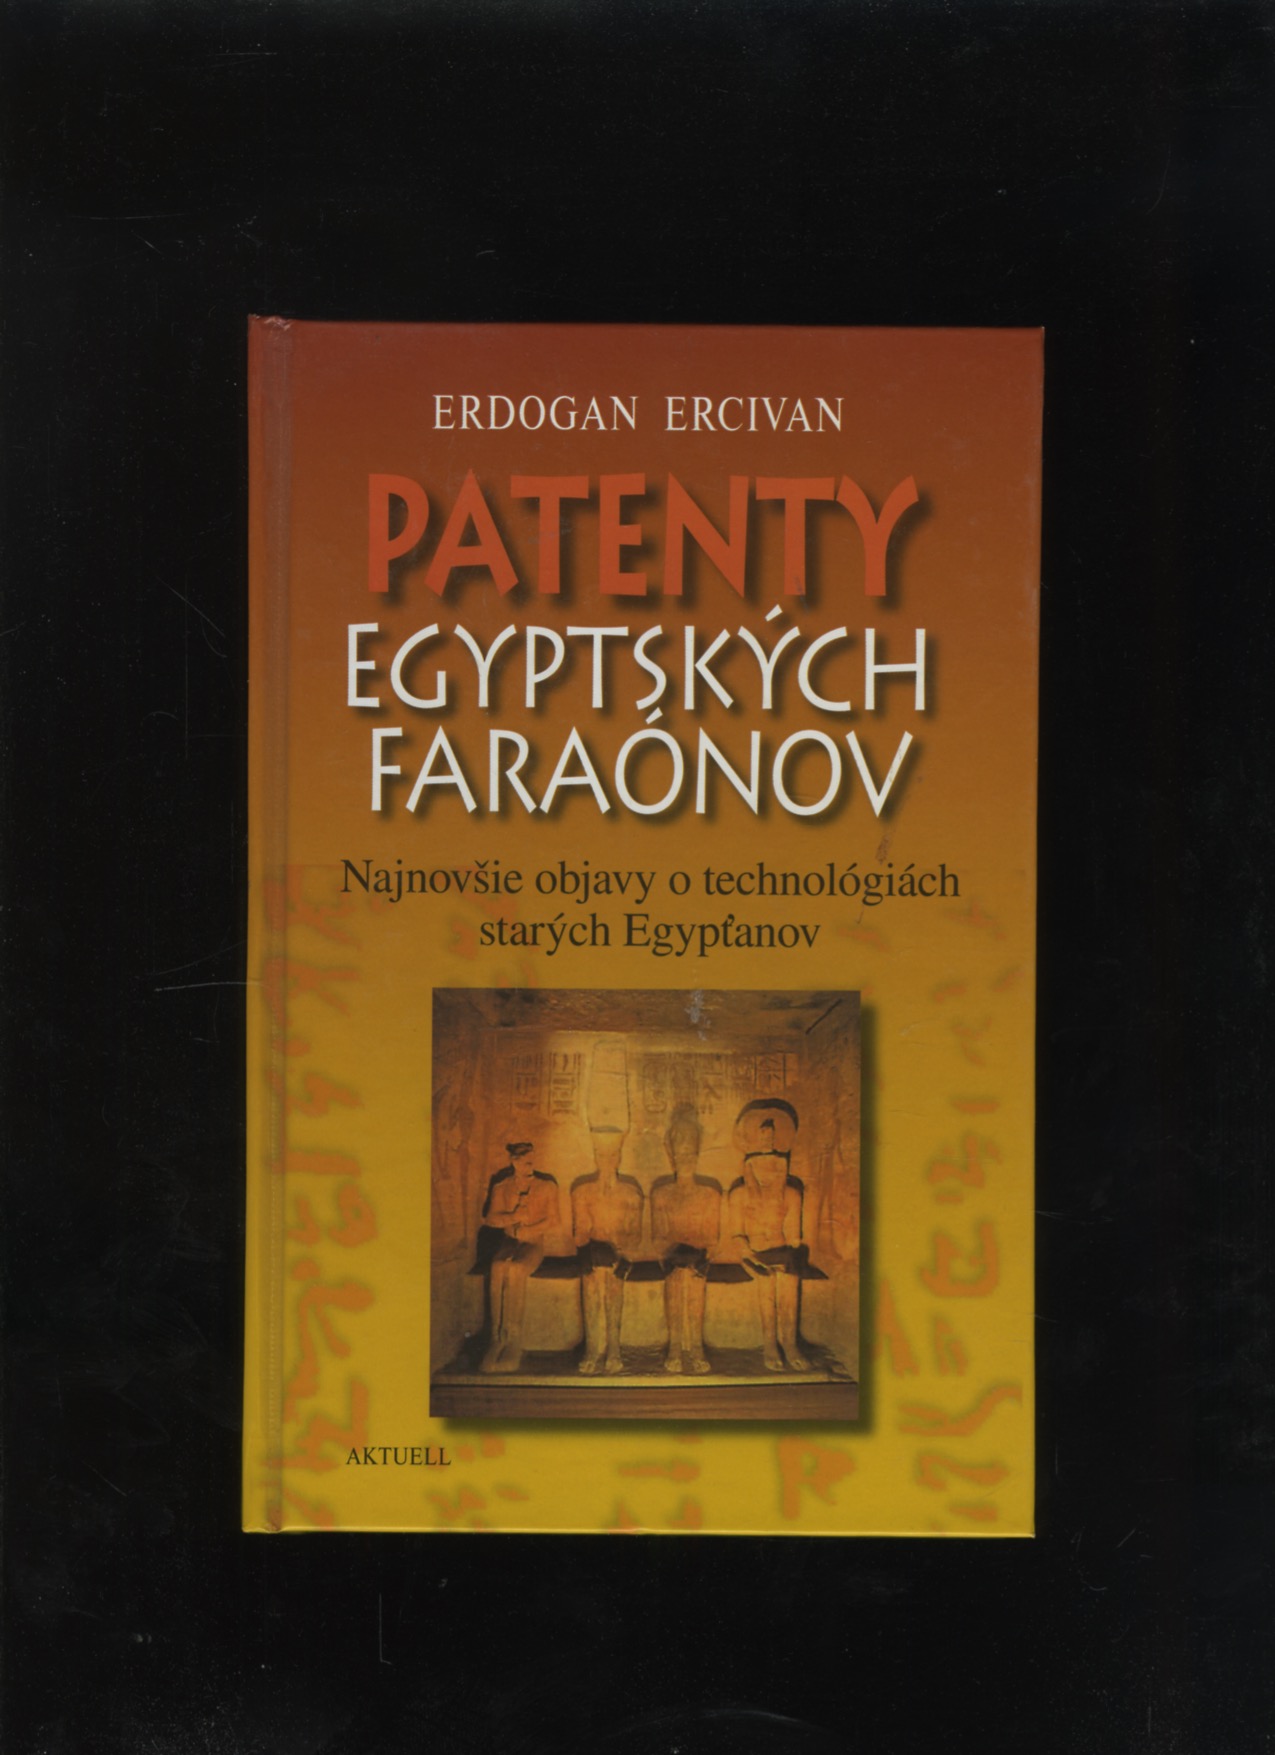 Patenty egyptských faraónov (Erdogan Ercivan)